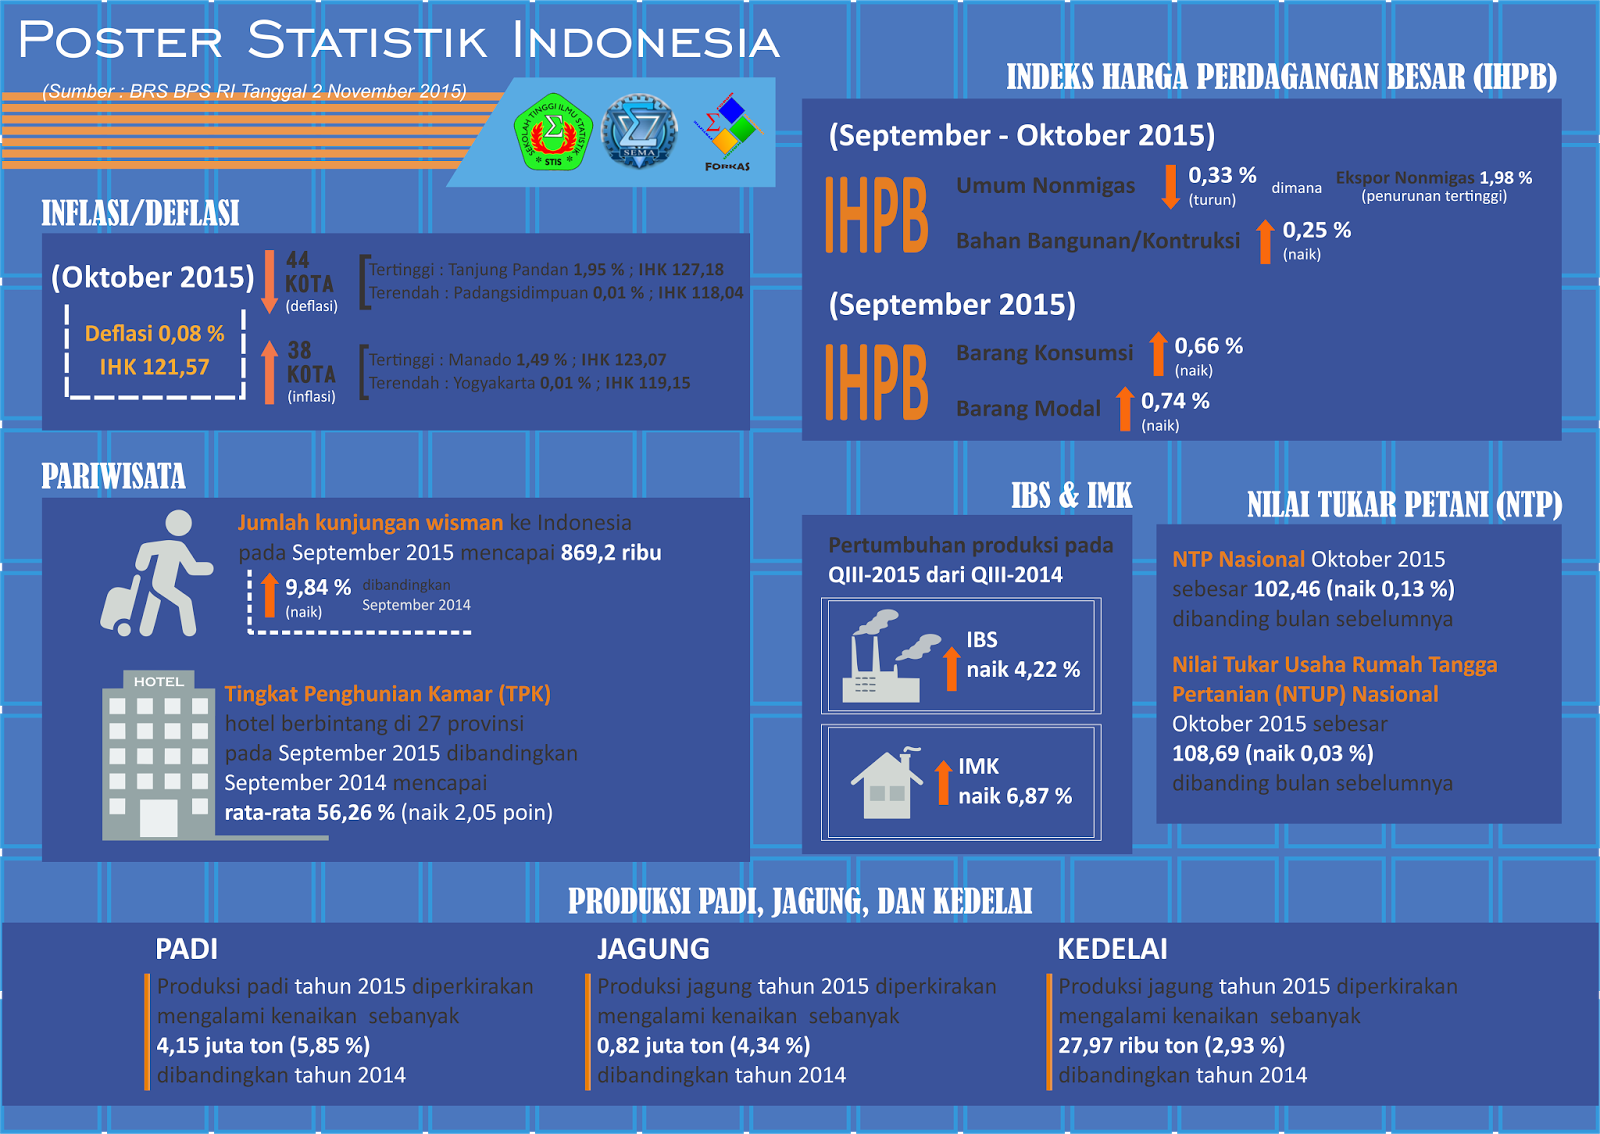 Forkas STIS: Poster Statistik Indonesia November 2015